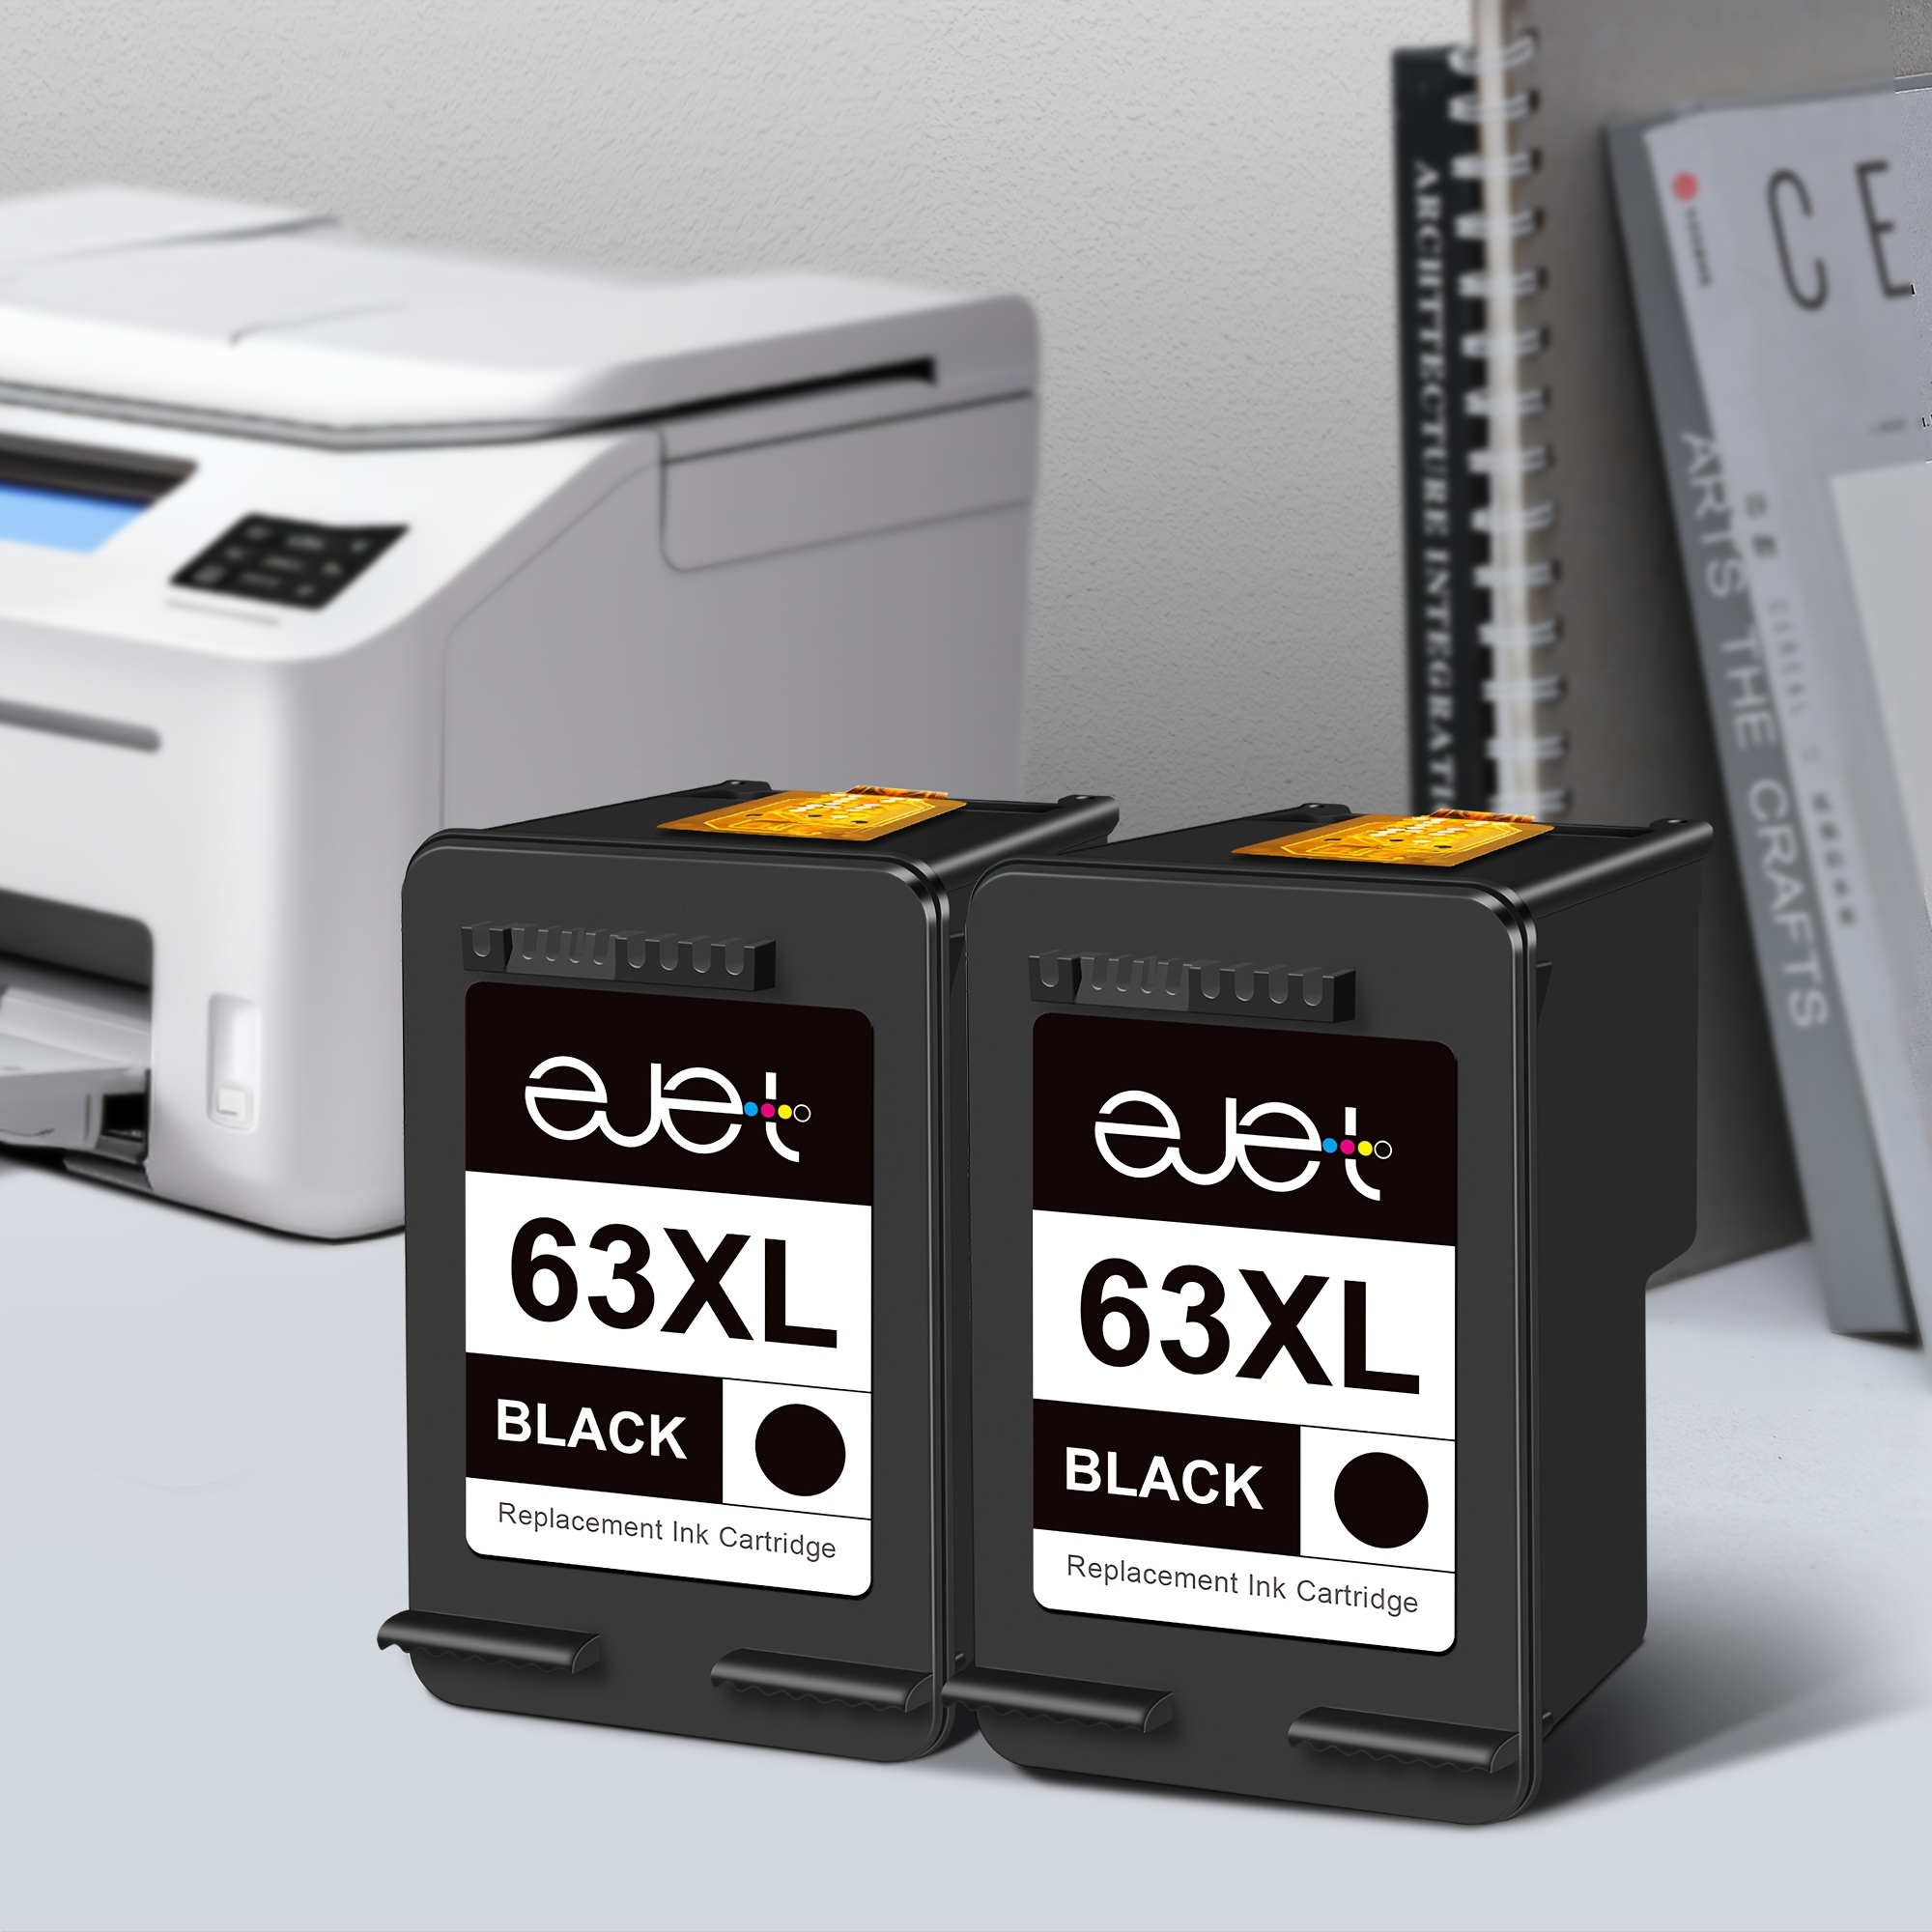 

2-pack 63 Remanufactured 63 Black Ink Cartridge Replacement For Hp63 Hp63 Used In Officejet 3830 5255 5258 Envy 4520 4512 4513 4516 Deskjet 1112 1110 3630 3632 3634 2132 Printer (2 Black)